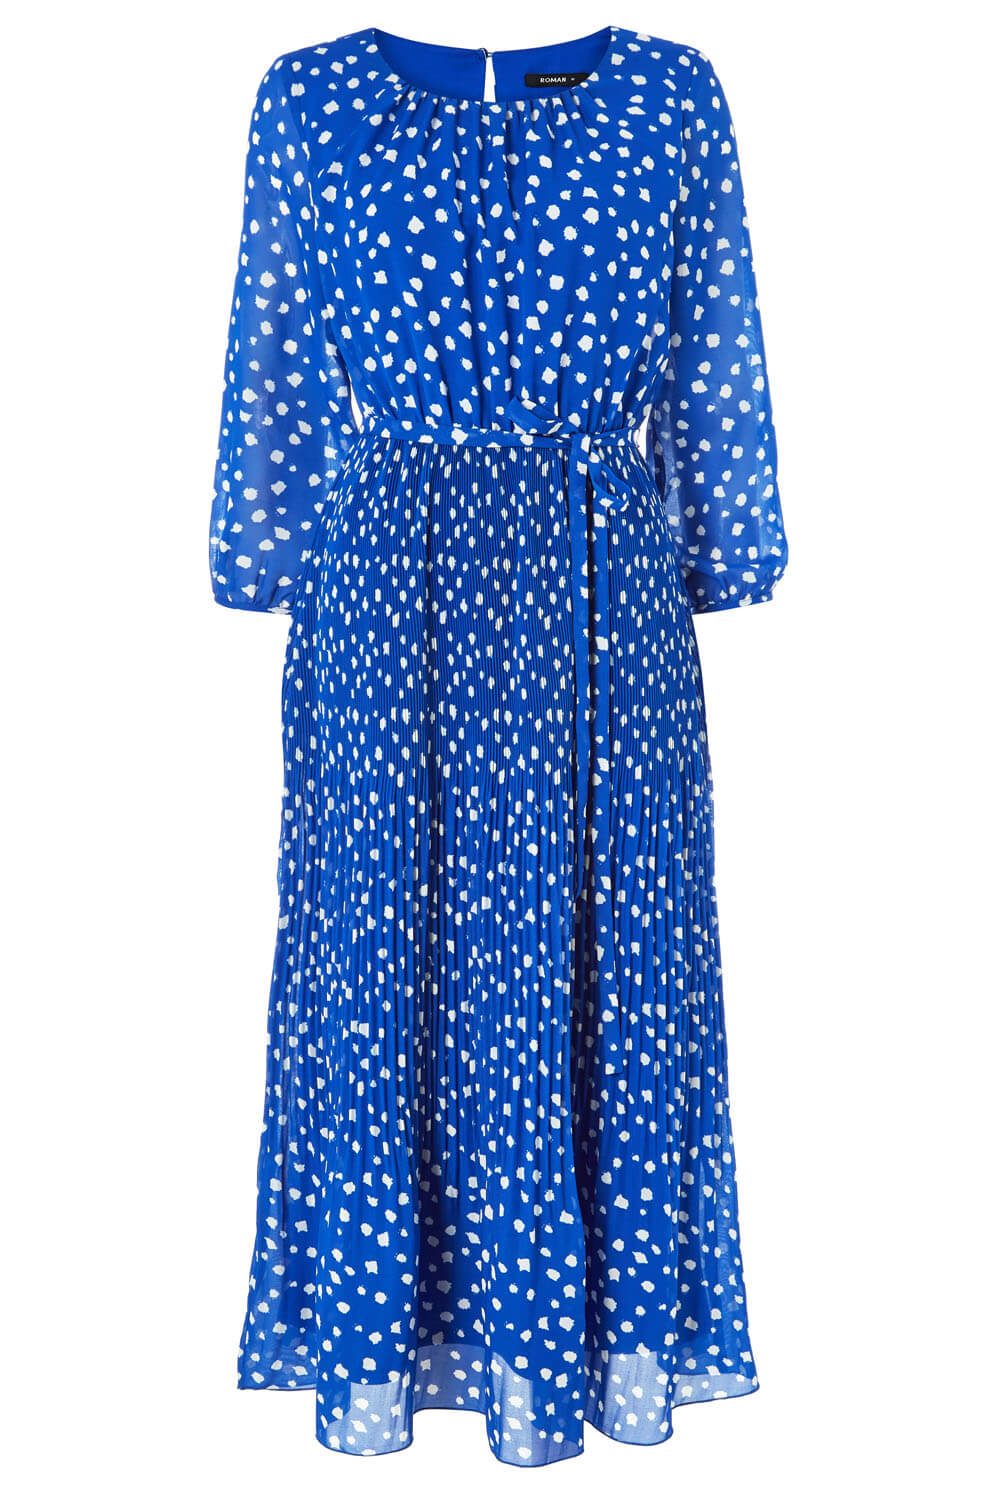 Royal Blue Spot Print Pleated Midi Dress, Image 6 of 6